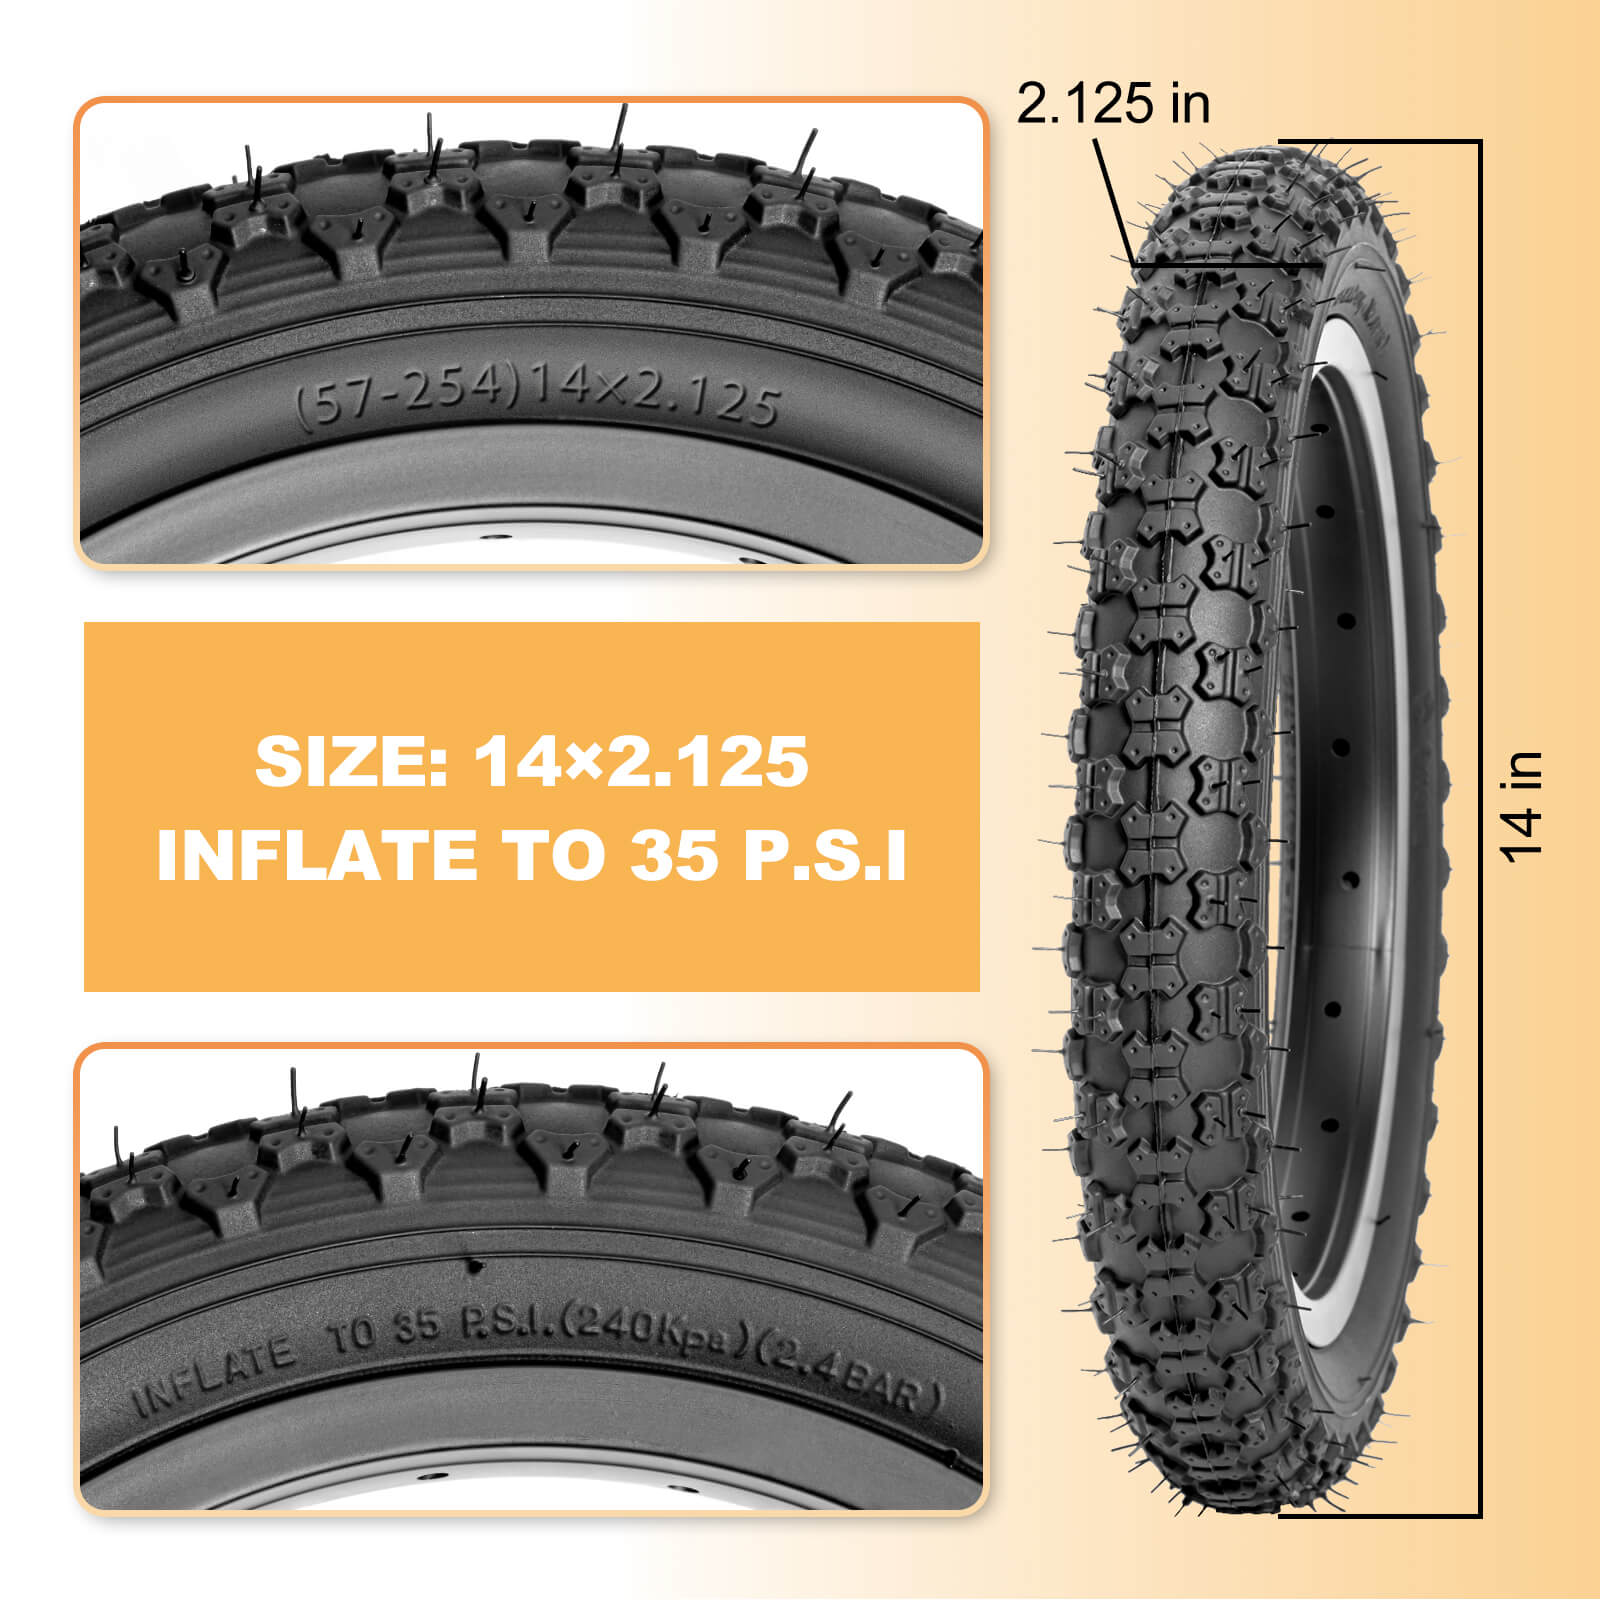 Hycline Bowlite 14"×2.125 Childs Bike Tire